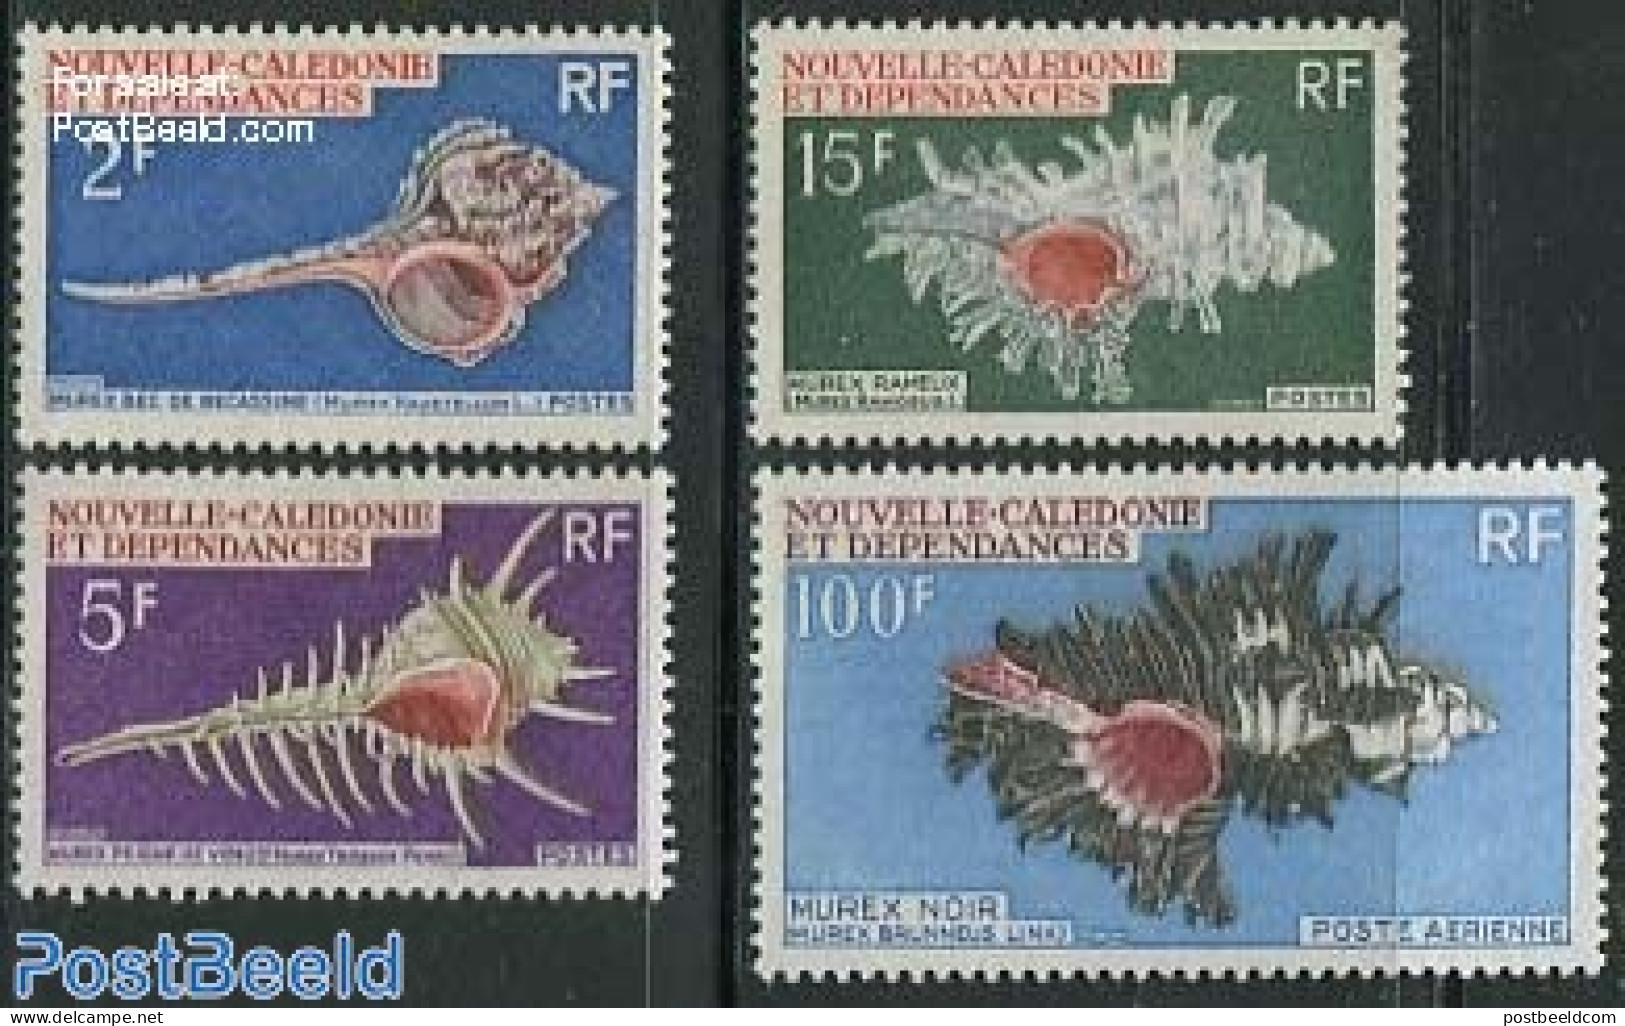 New Caledonia 1969 Shells 4v, Mint NH, Nature - Shells & Crustaceans - Neufs